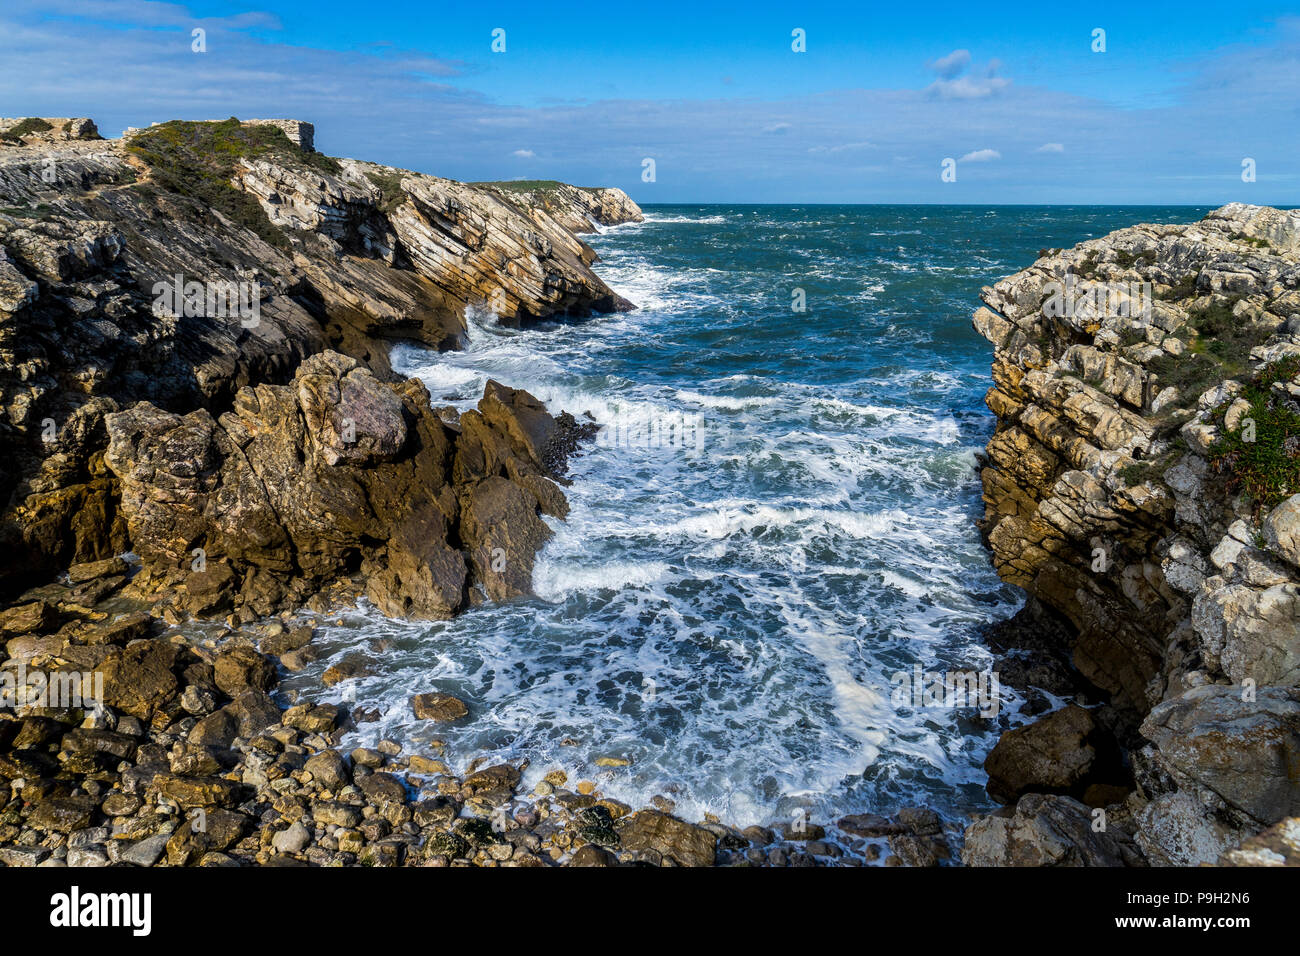 Baleal peninsula near Peniche Portugal. Stormy sea crashing on the rocks Stock Photo